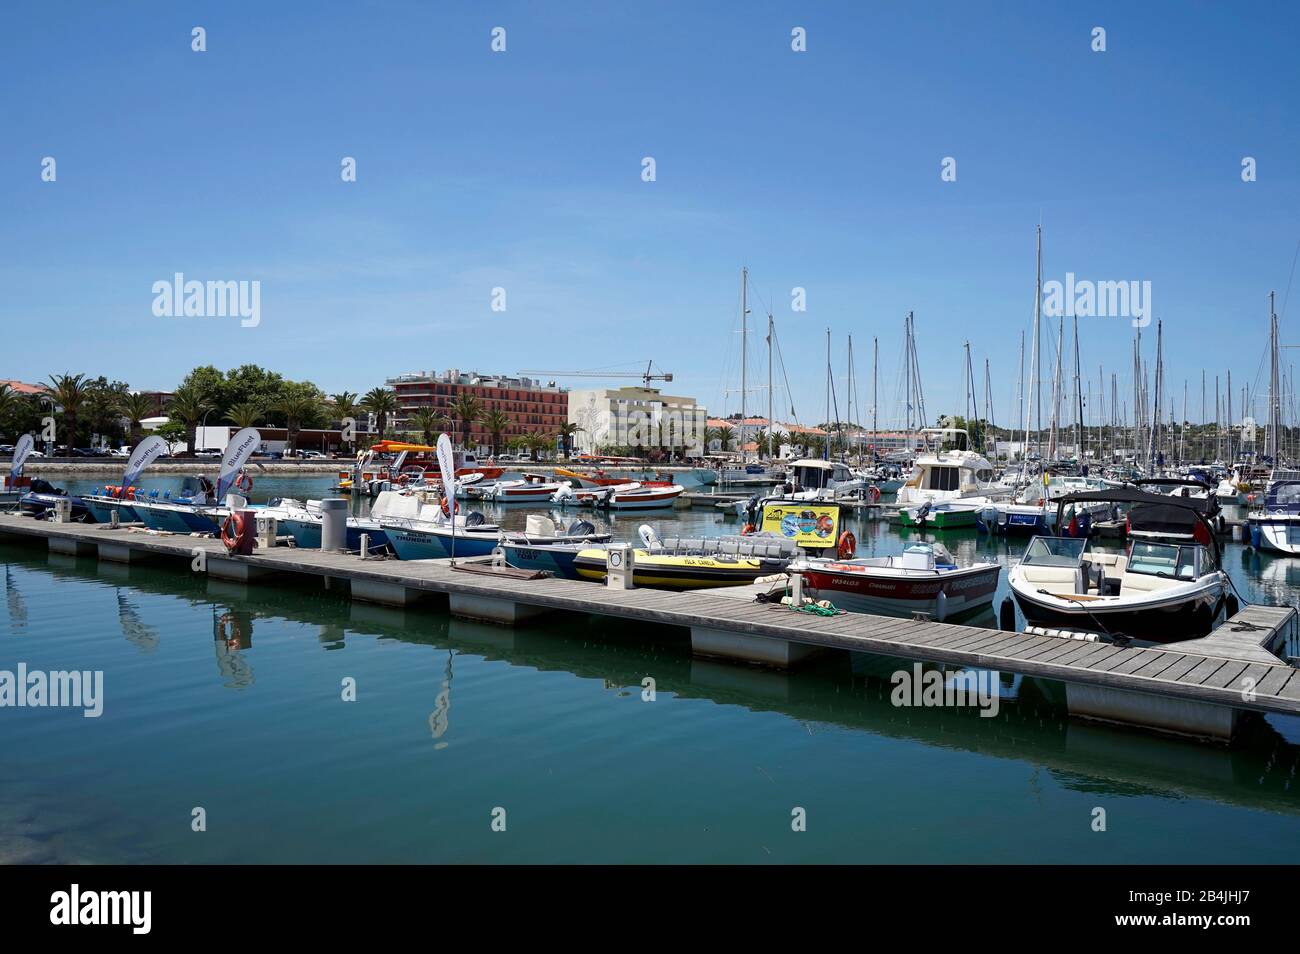 Europe, Portugal, Algarve region, Lagos, marina, Marina de Lagos Stock Photo